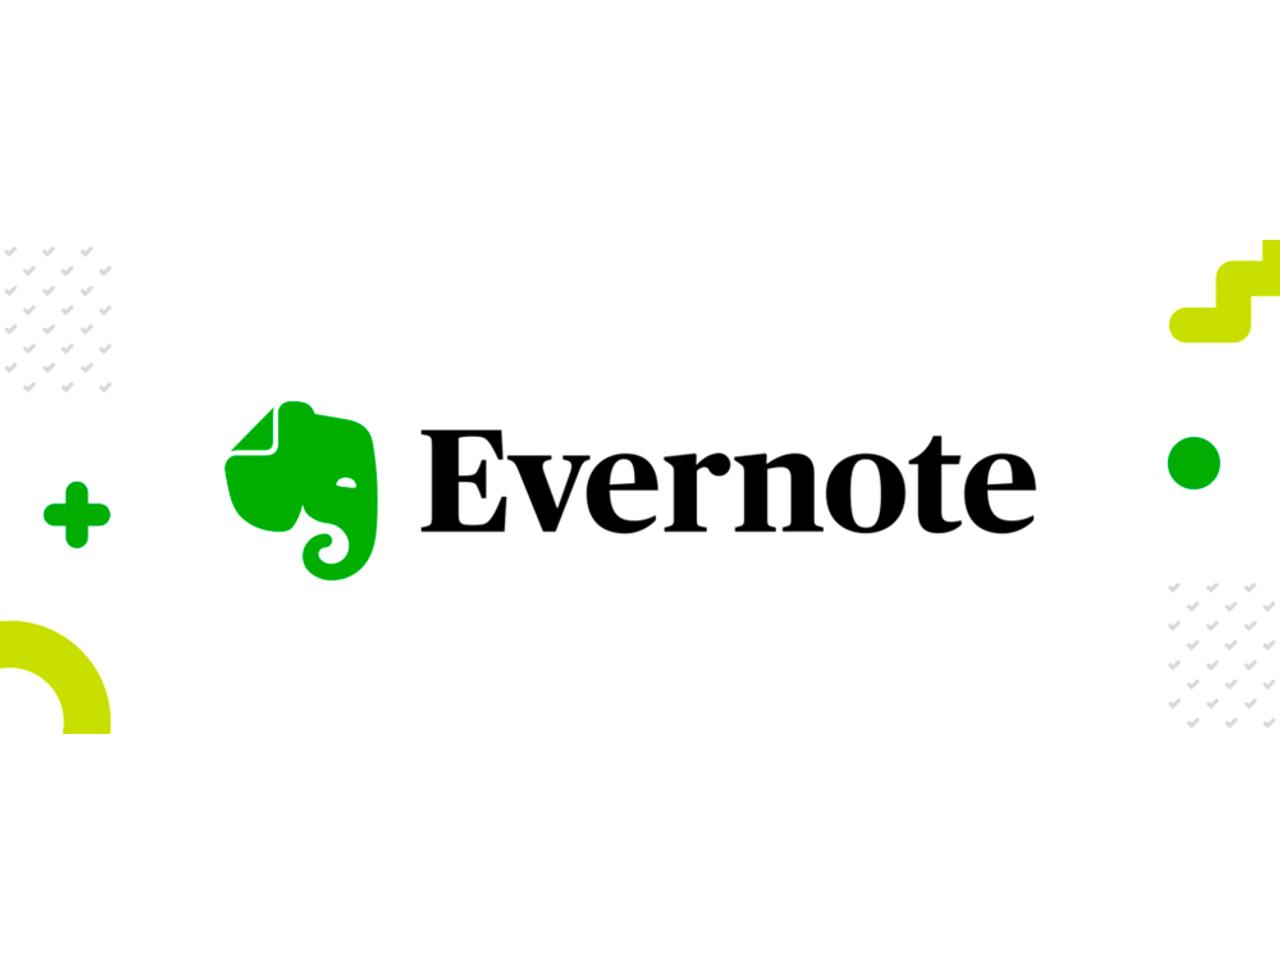 Evernoteのロゴ、新しくなりました。なんかノスタルジィを感じない？